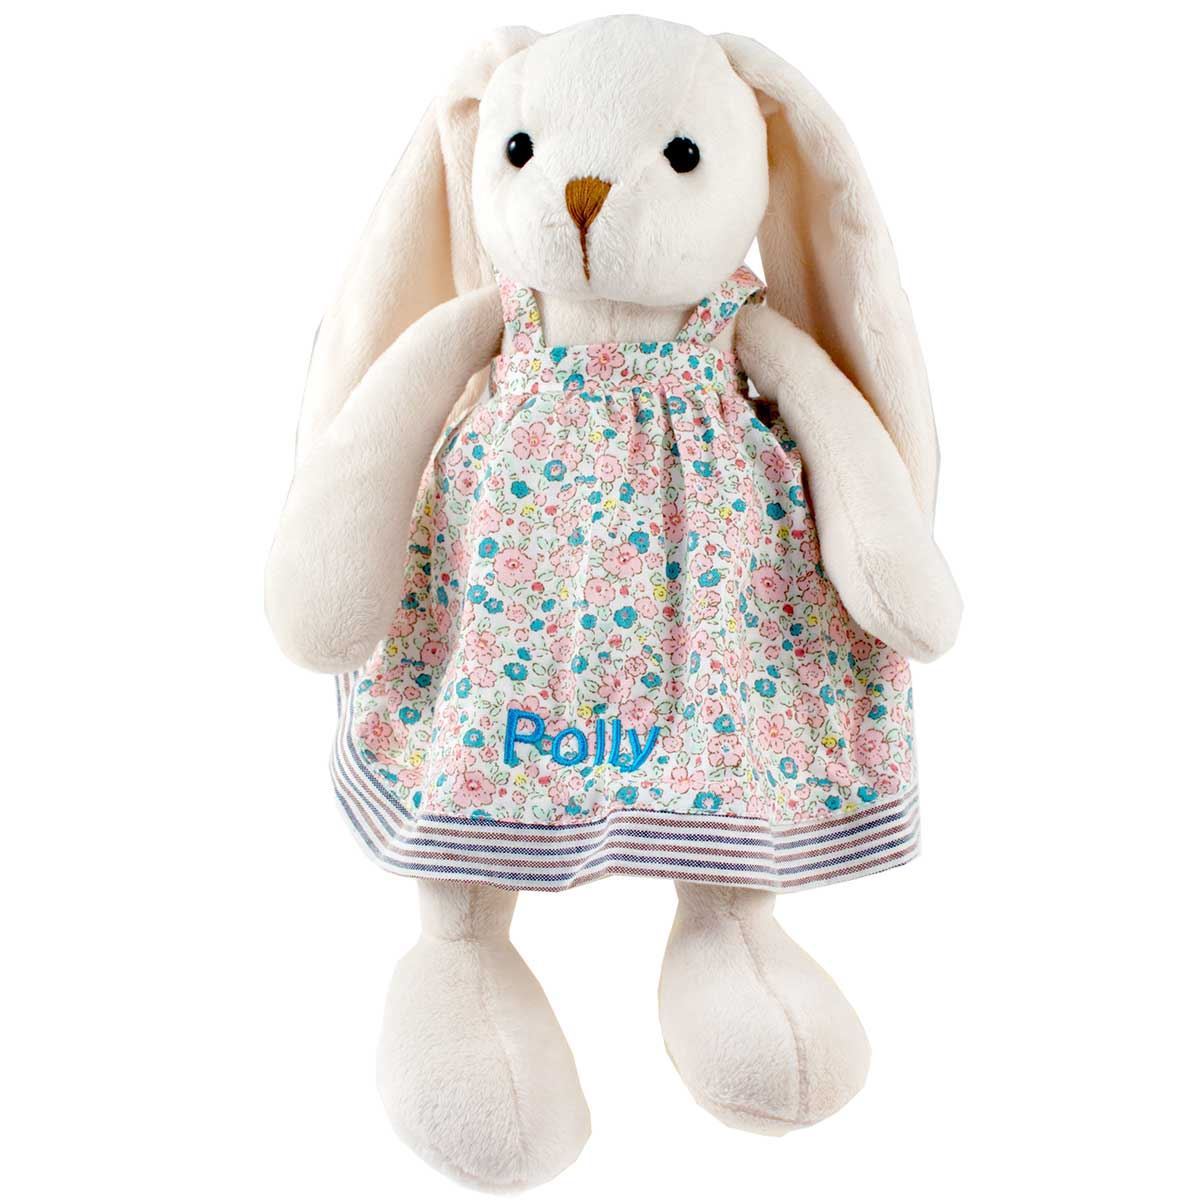 Personalised Mrs Rabbit | Personalised Dolls & Soft Toys